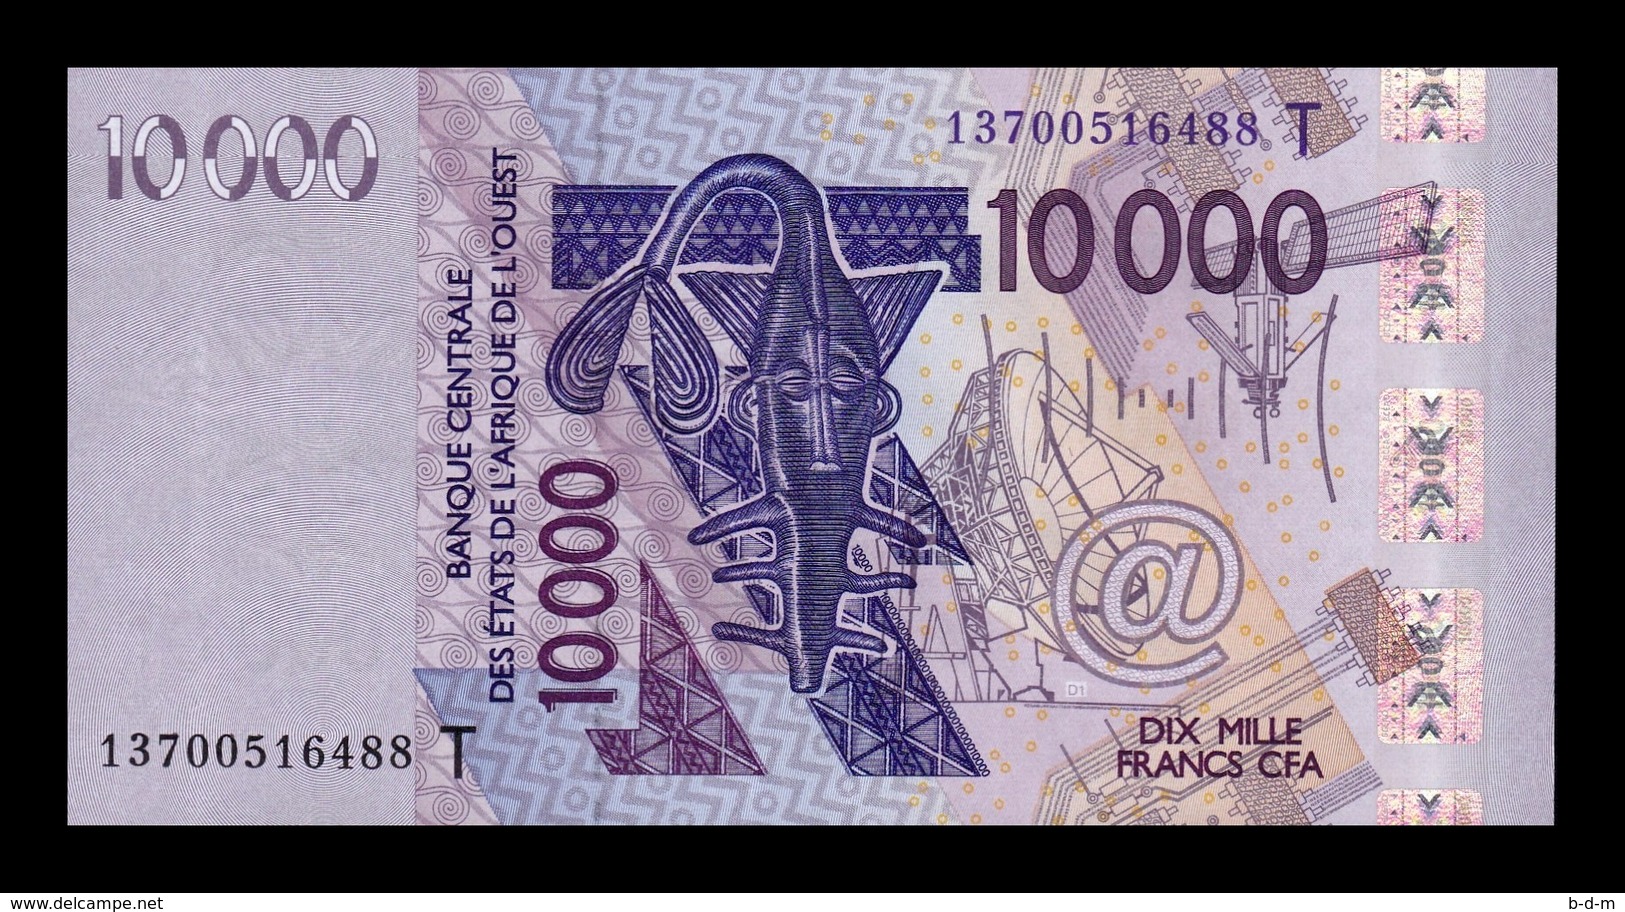 West African St. Togo 10000 Francs CFA 2013 Pick 818Tm SC UNC - Togo